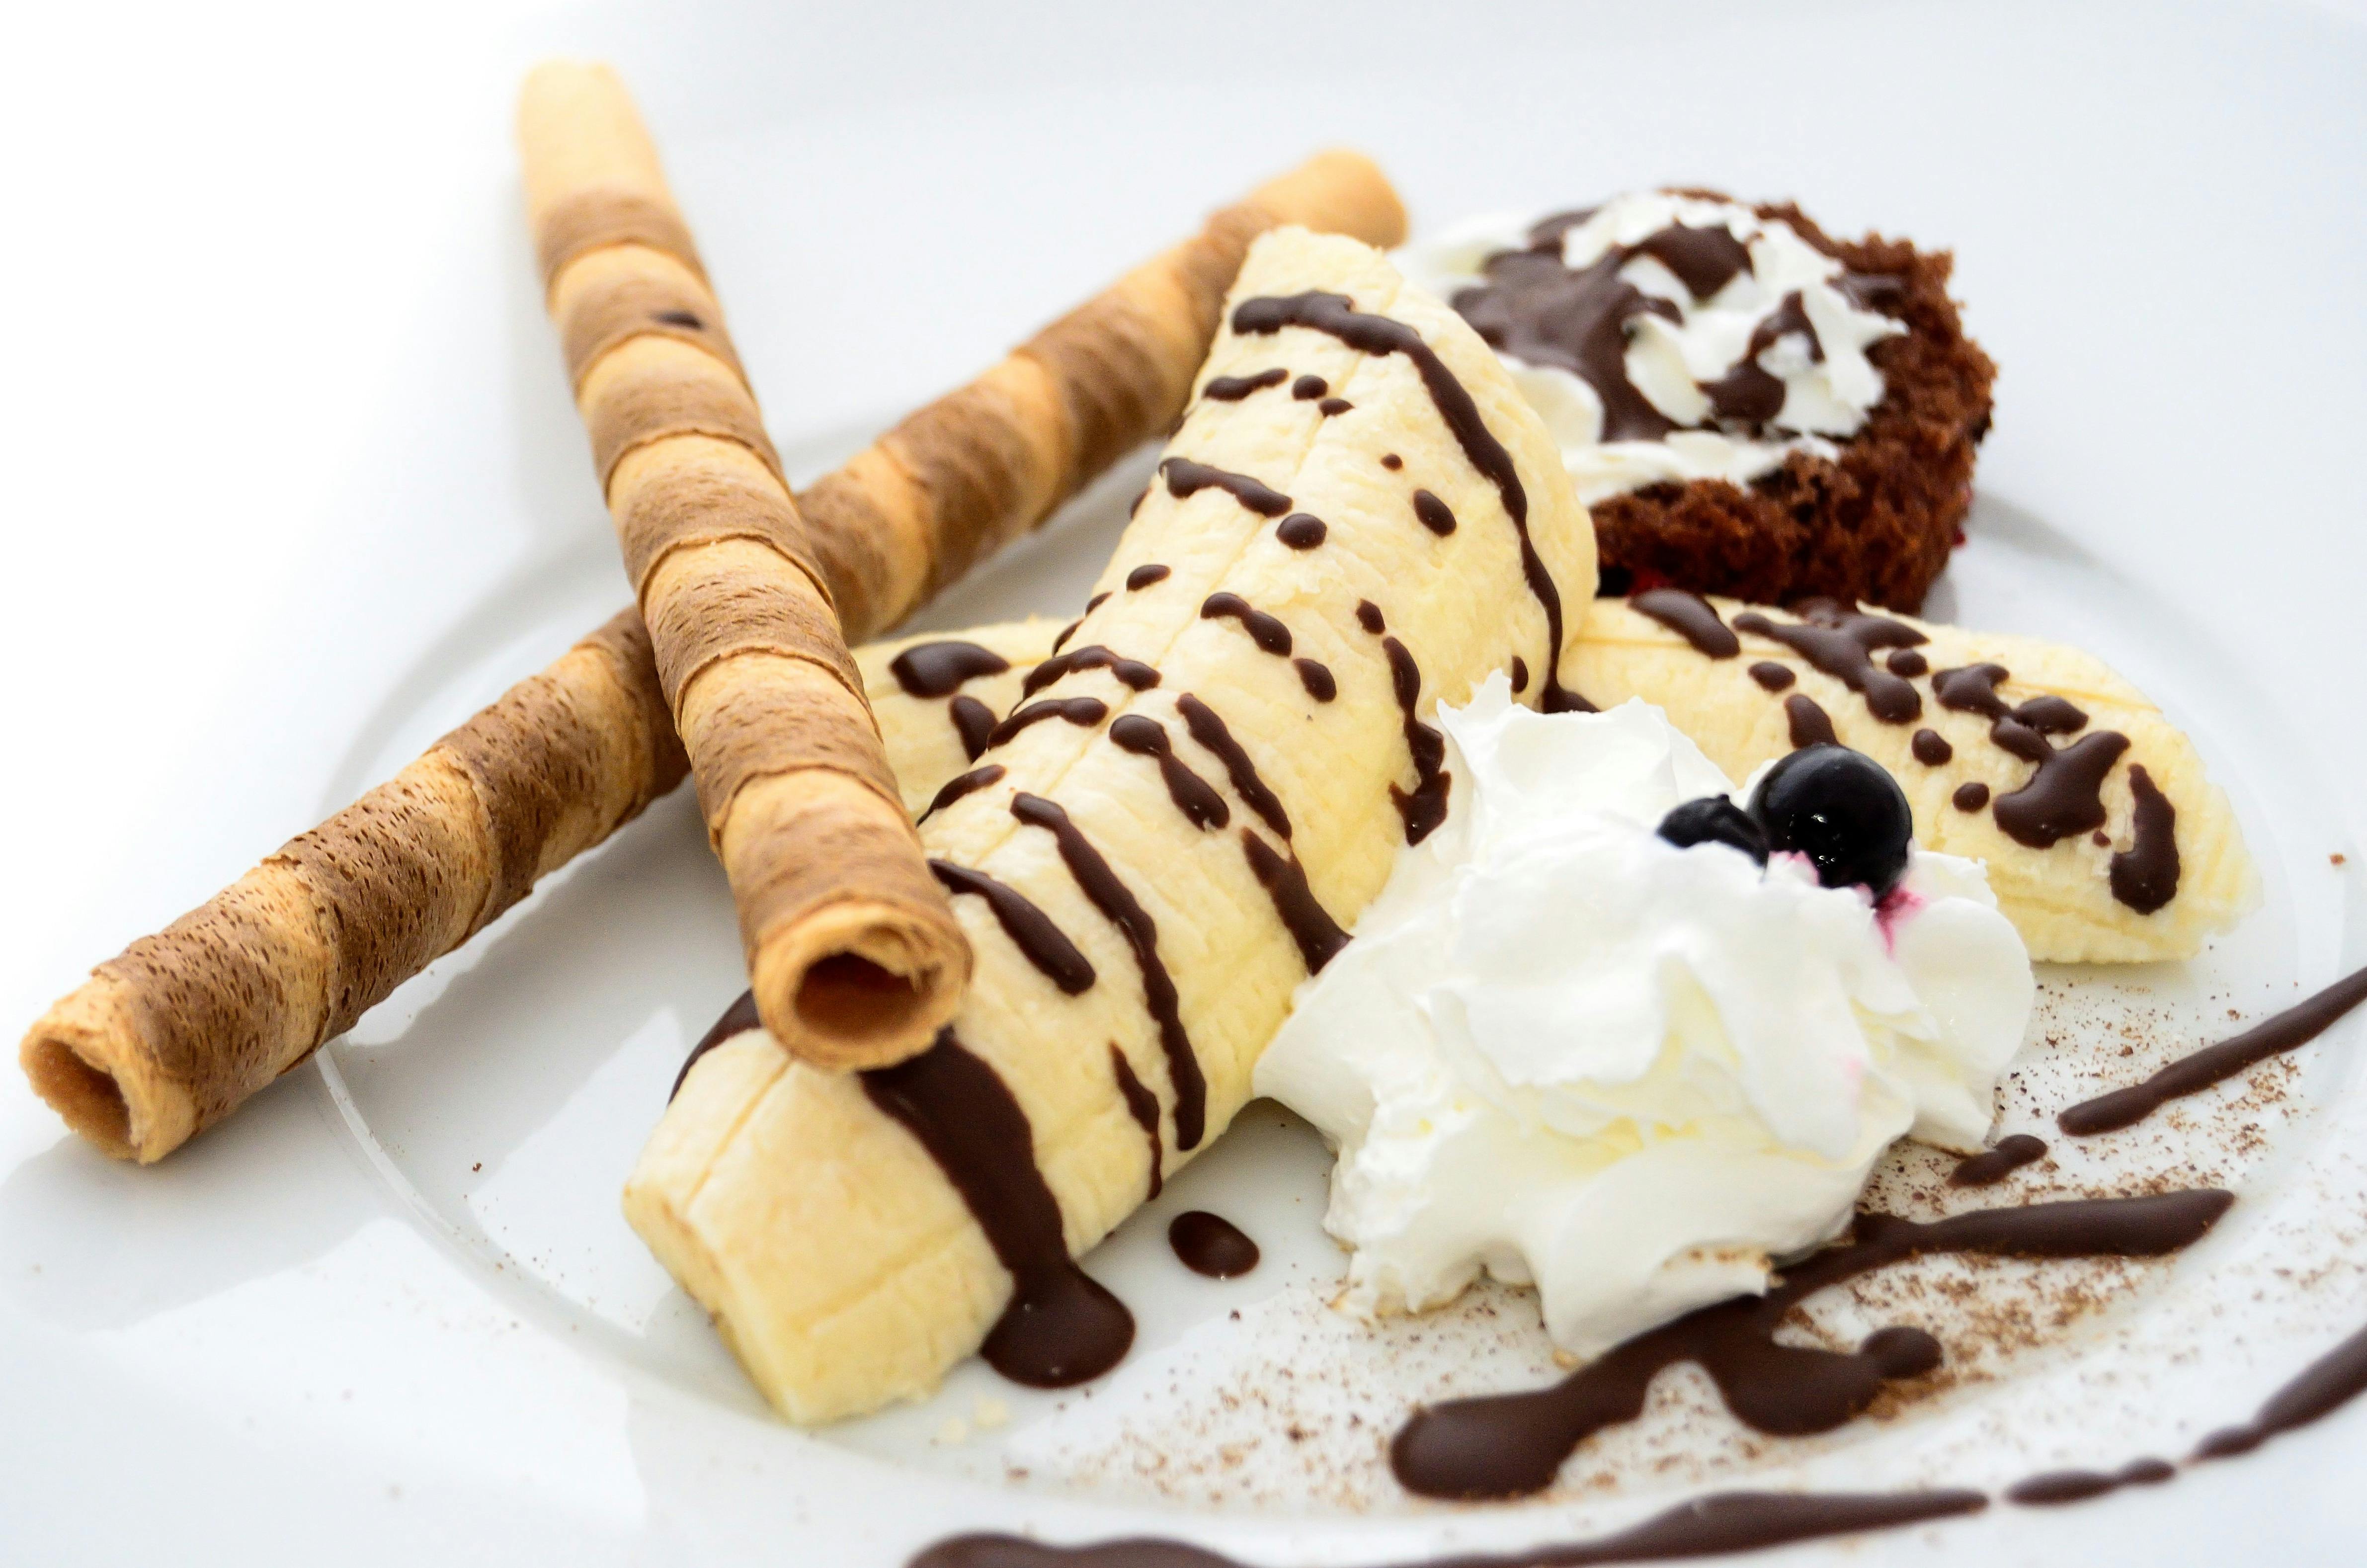 bananas-dessert-ice-cream-fruit-47062.jpeg (4763×3155)